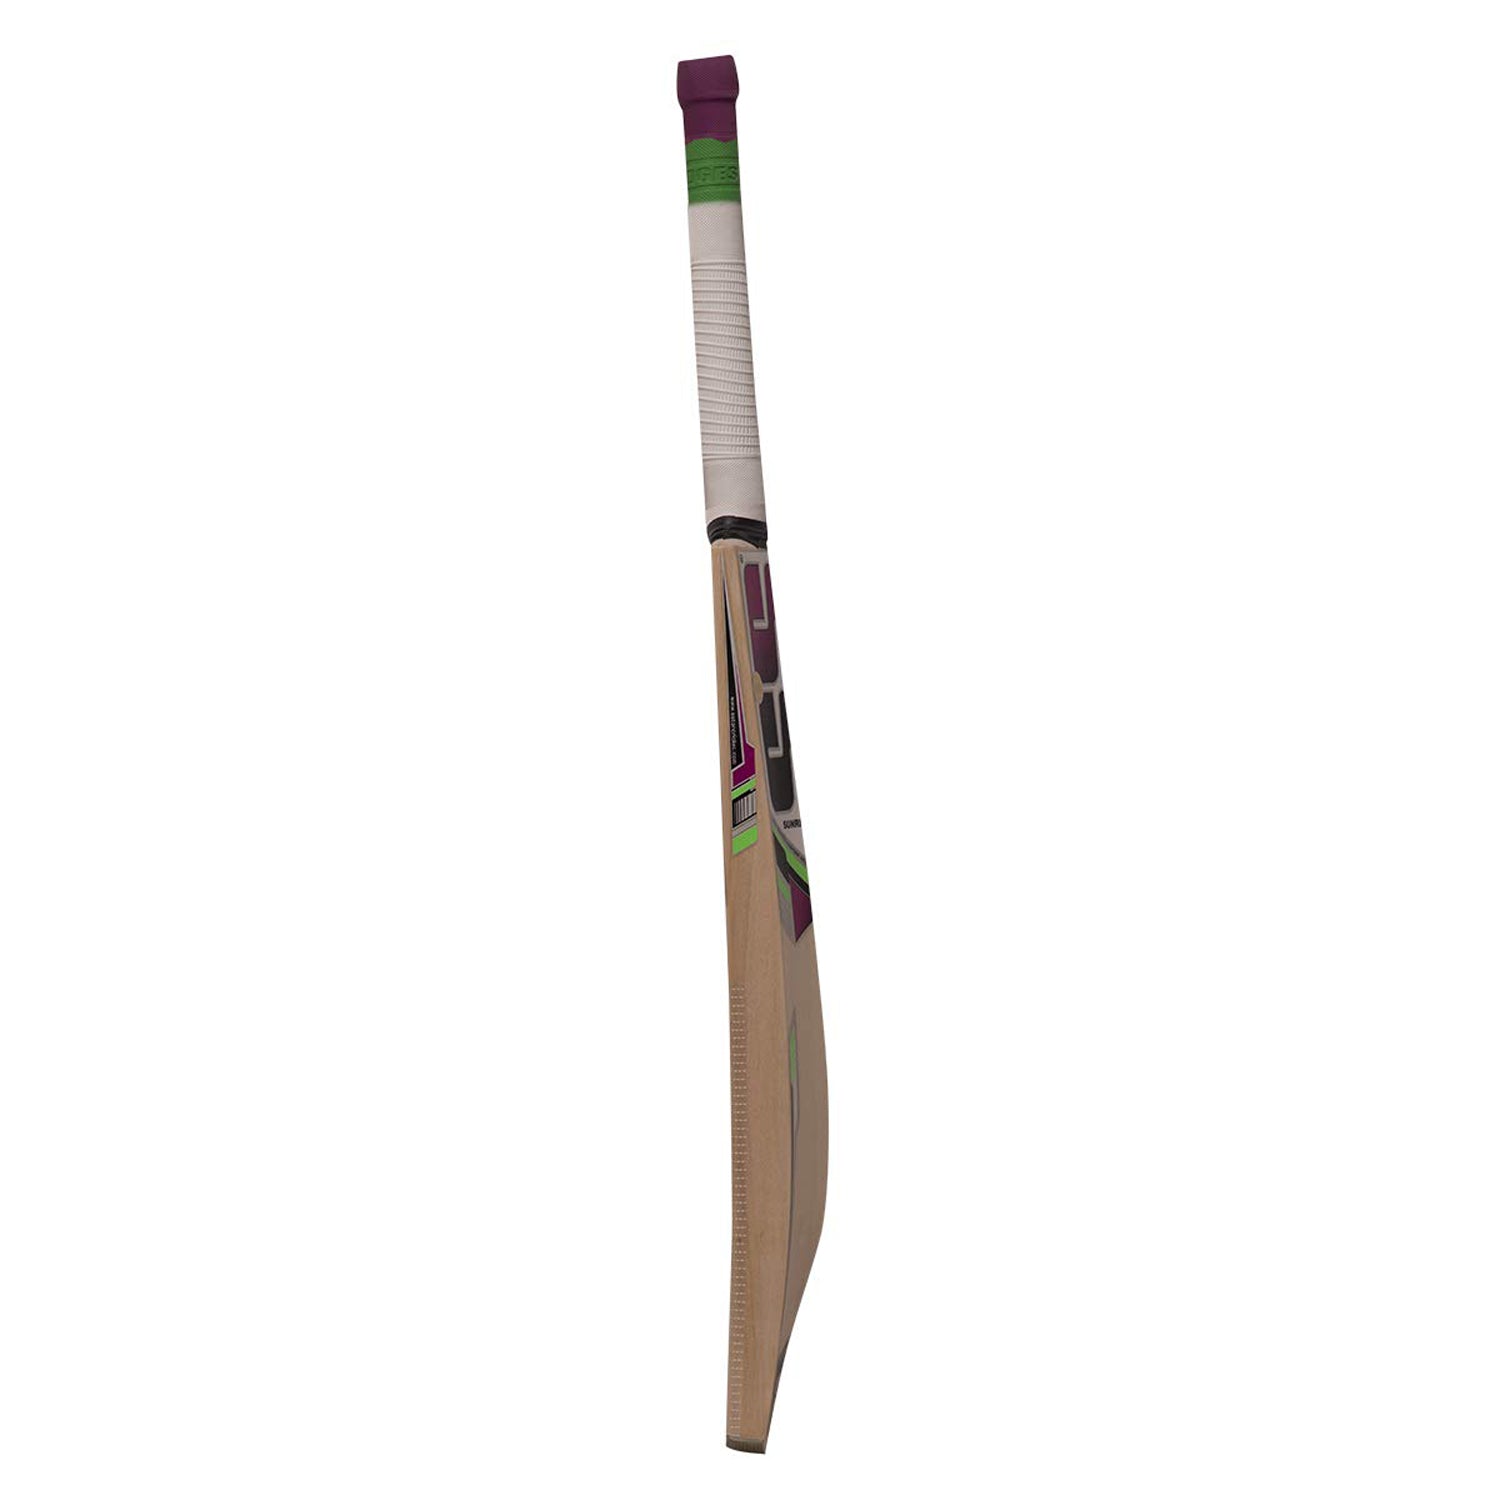 SS Josh Kashmir Willow Cricket Bat - Best Price online Prokicksports.com